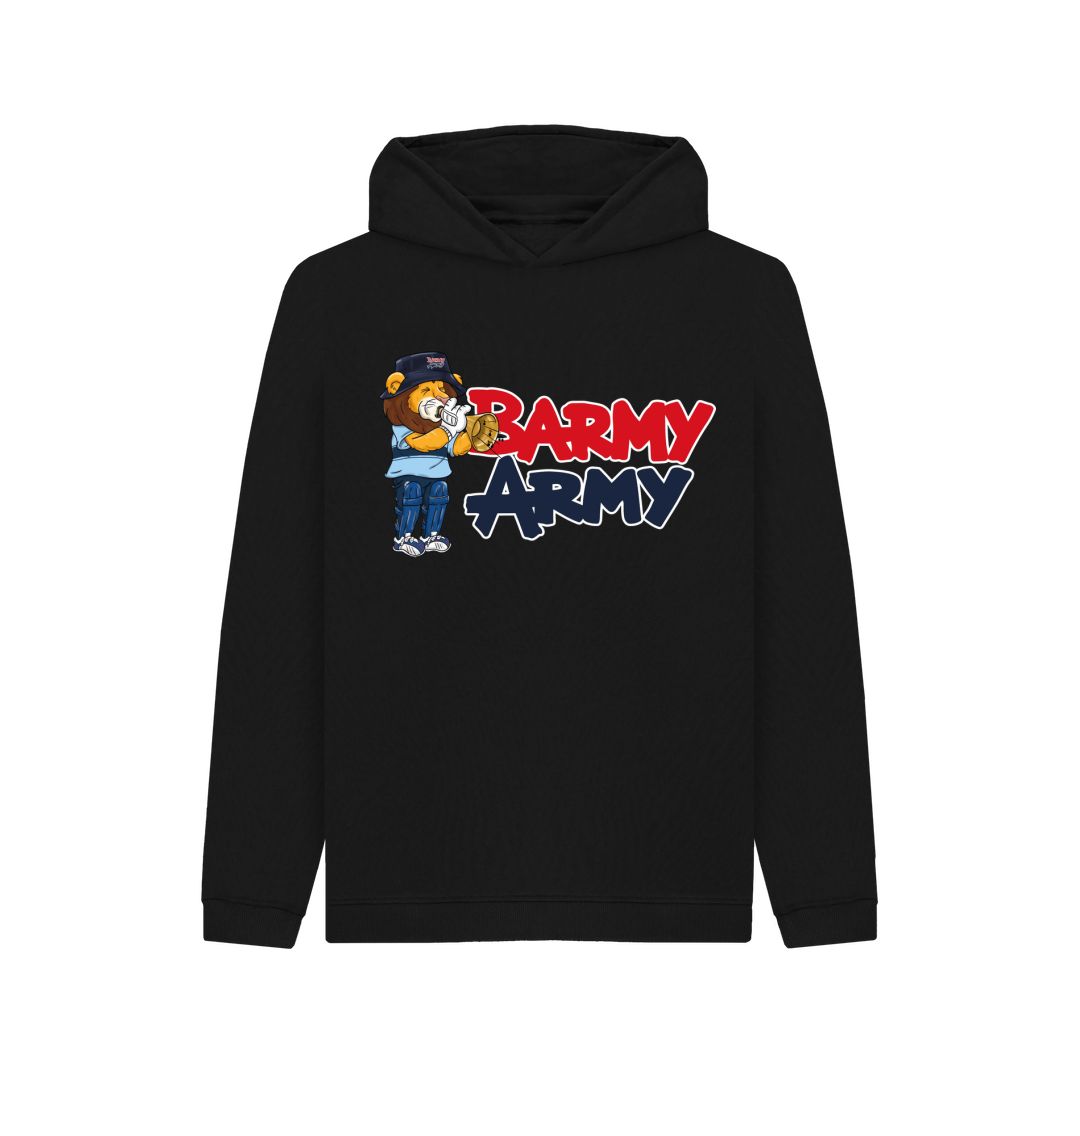 Black Barmy Army Trumpet Mascot Hoddy - Juniors